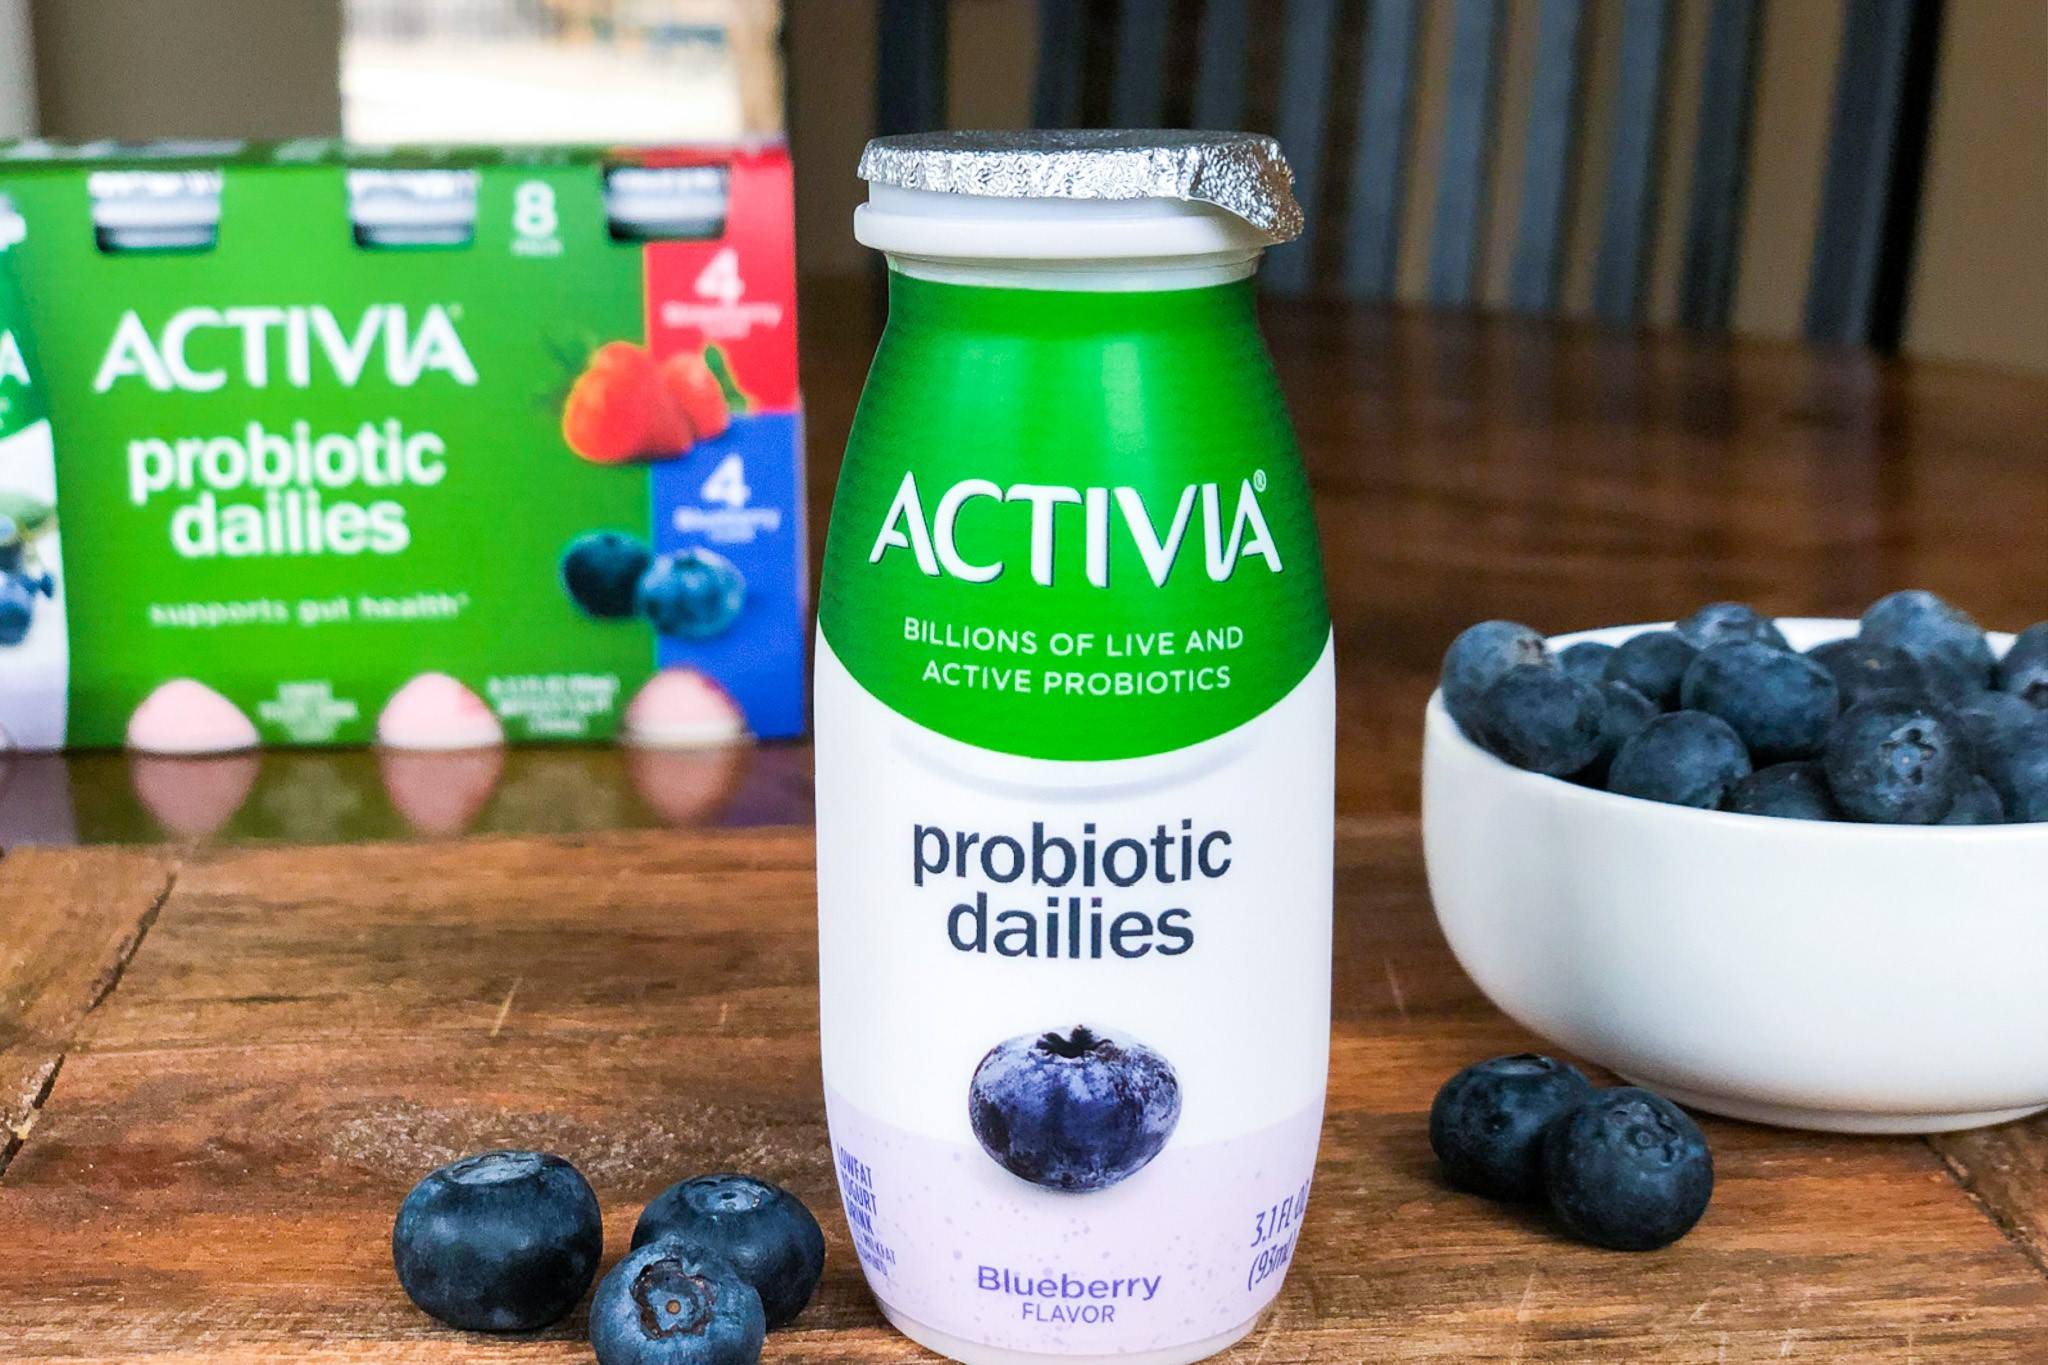 15-activia-probiotic-dailies-nutrition-facts